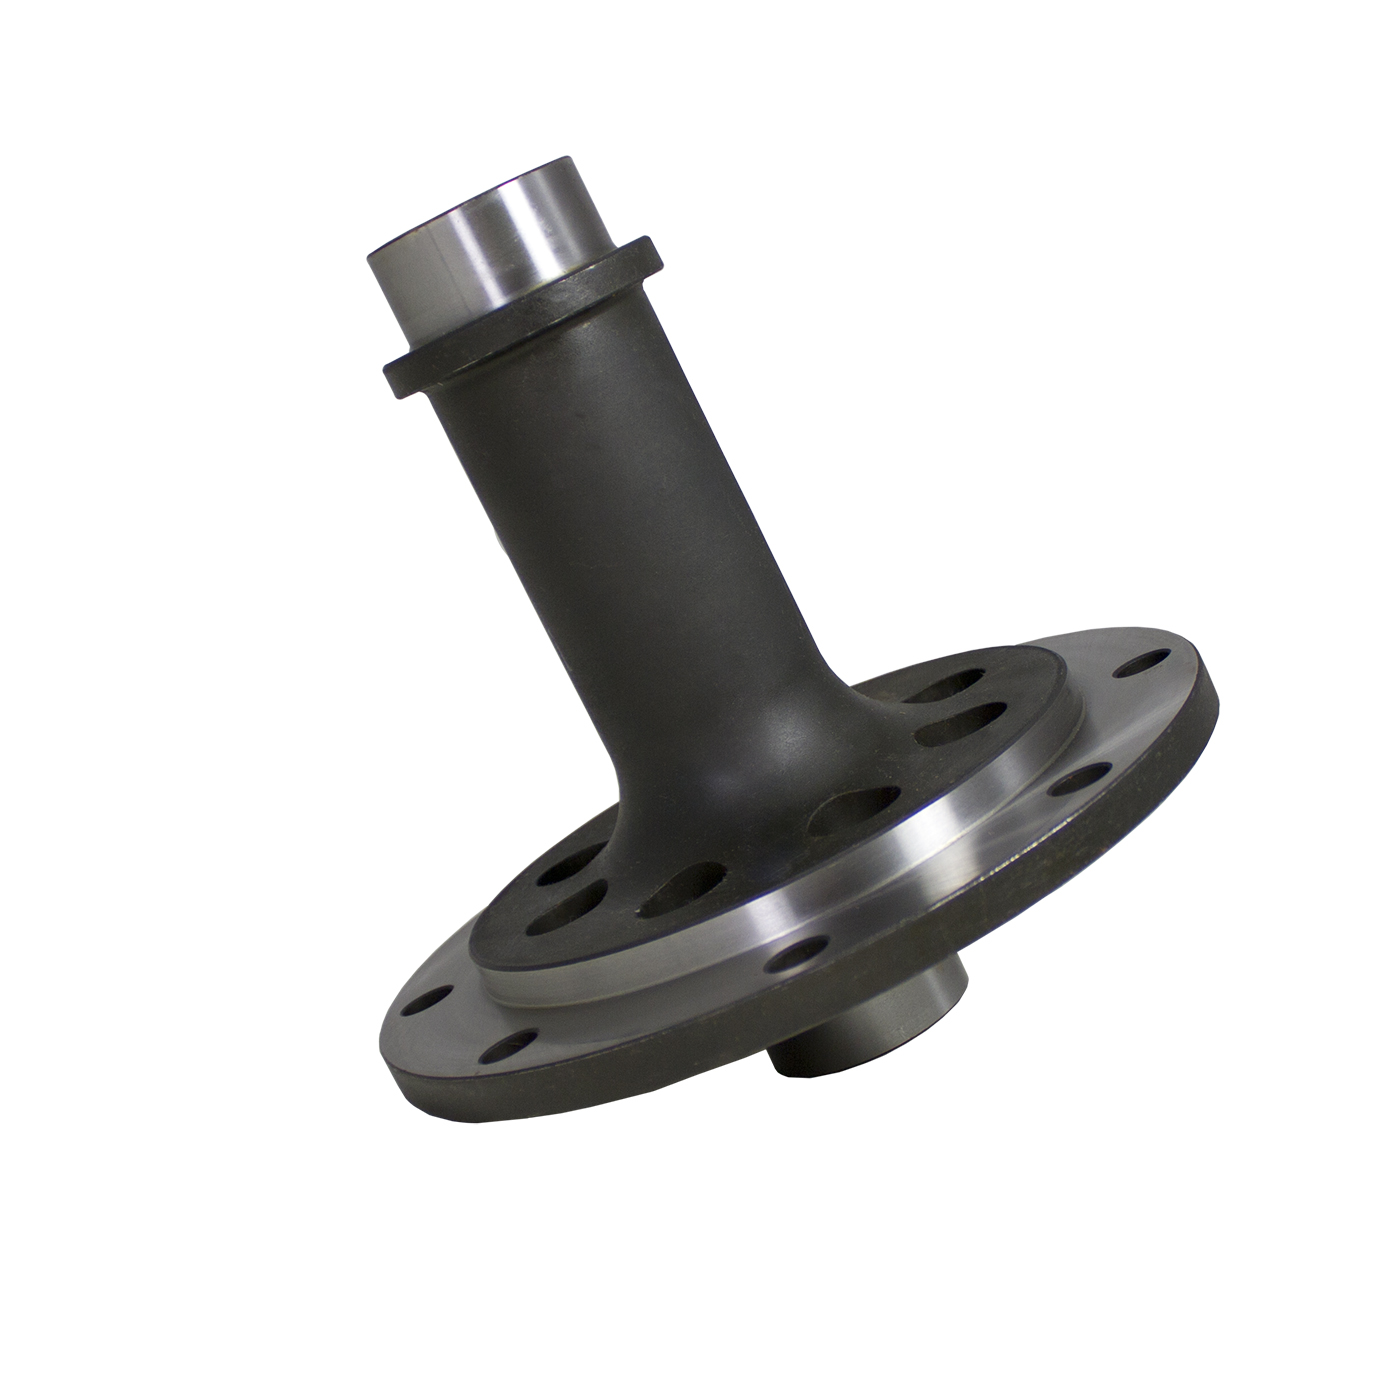 USA Standard steel spool for Model 20 with 29 spline axles, 3.08 & up